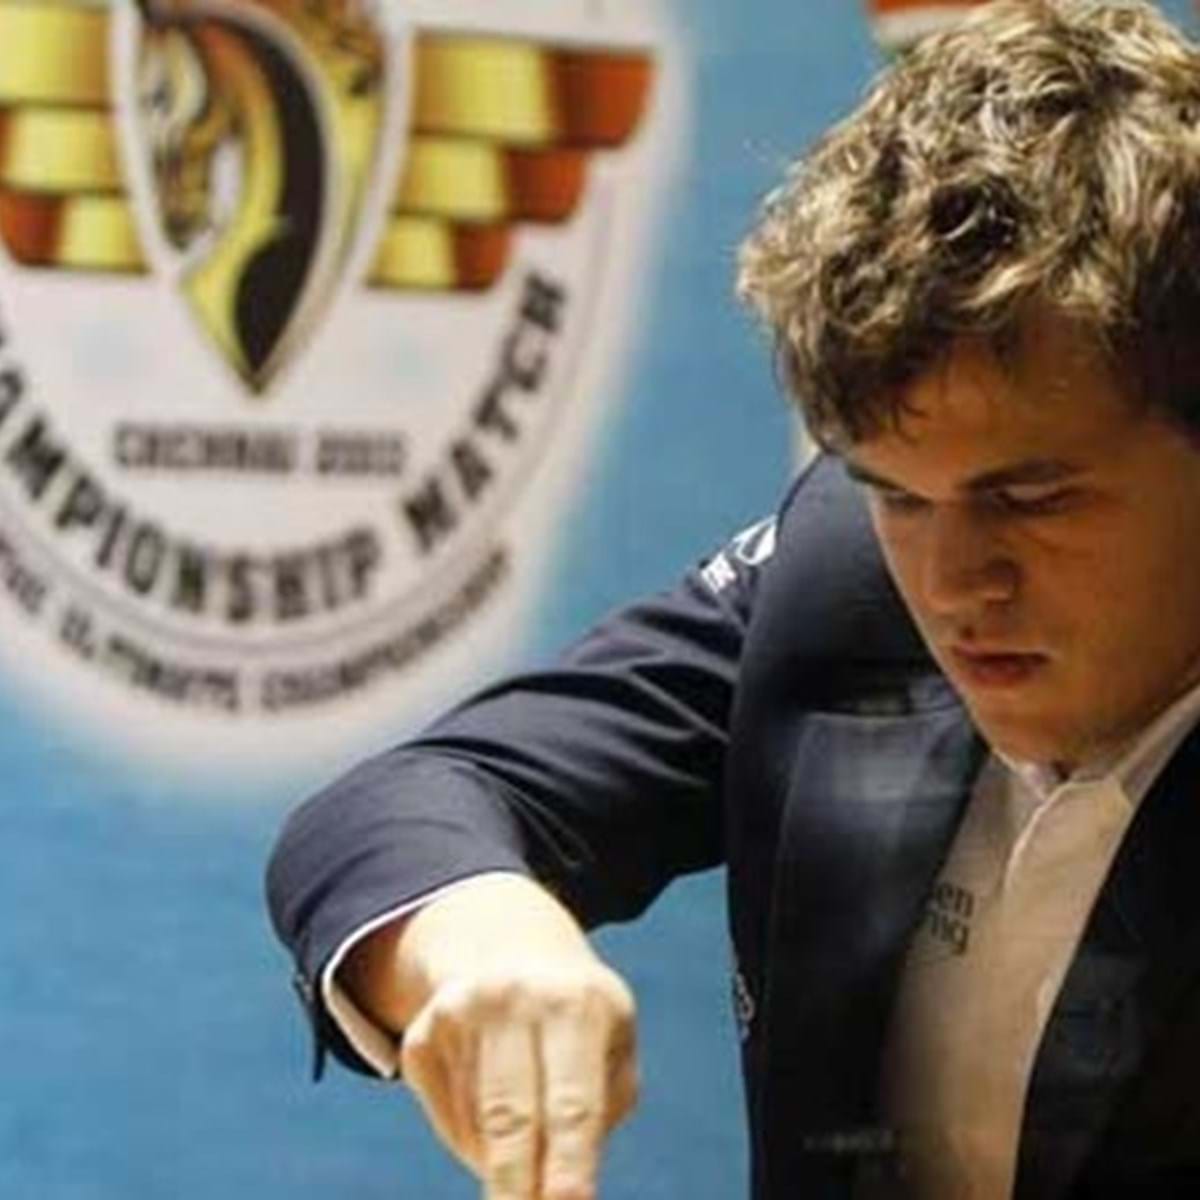 Magnus Carlsen renova pela 5ª vez título de Campeão Mundial de Xadrez